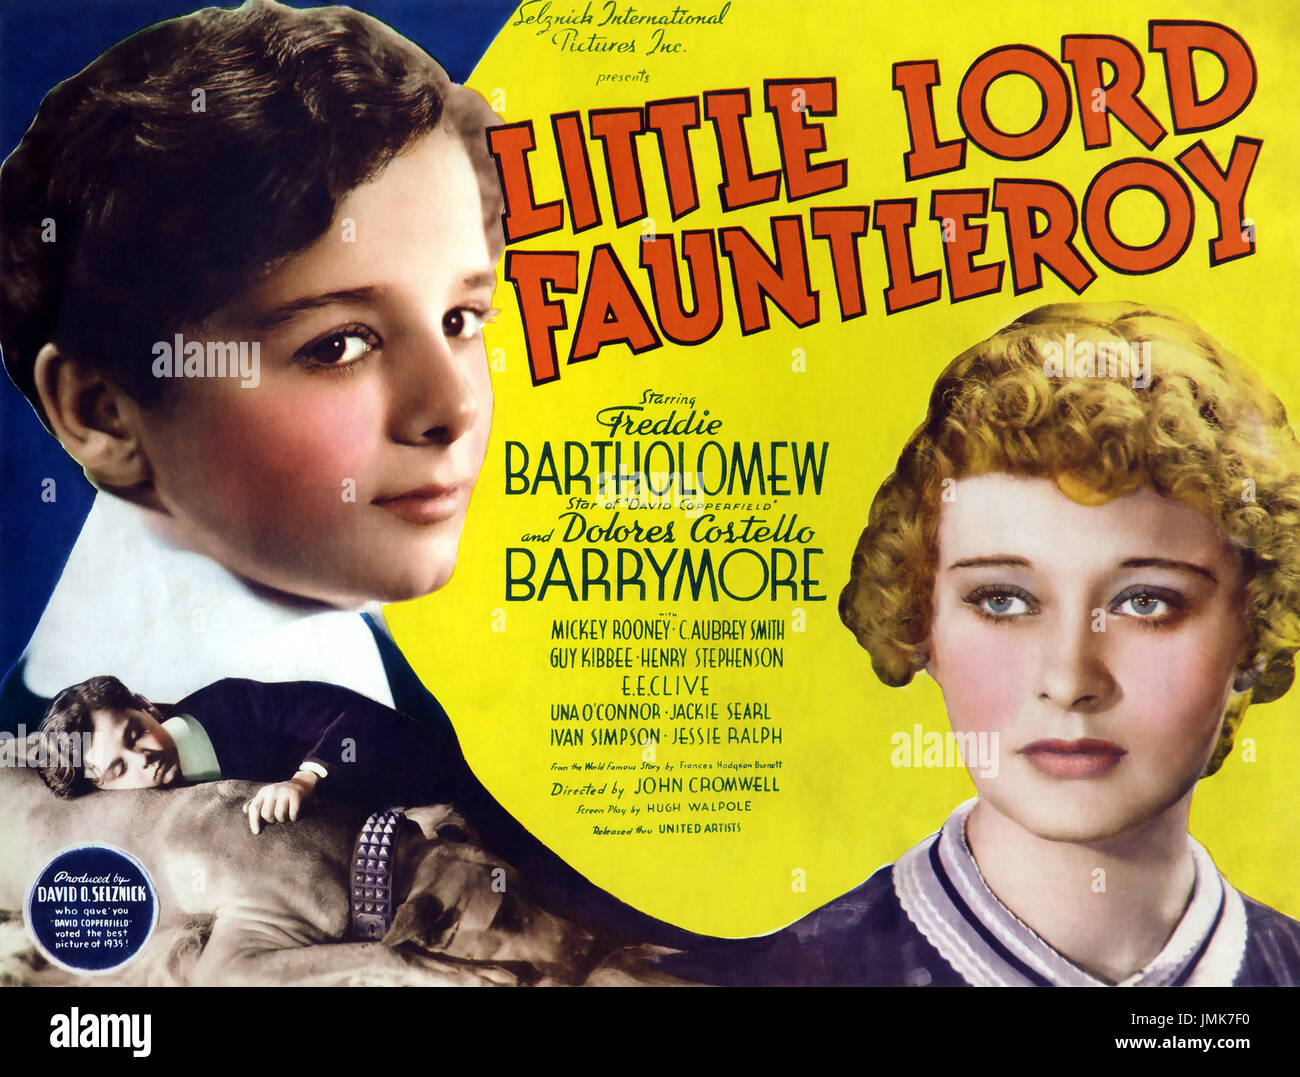 LITTLE LORD FAUNTLEROY 1936 United Artists film con Dolores Costello y Freddie Bartholomew Foto de stock